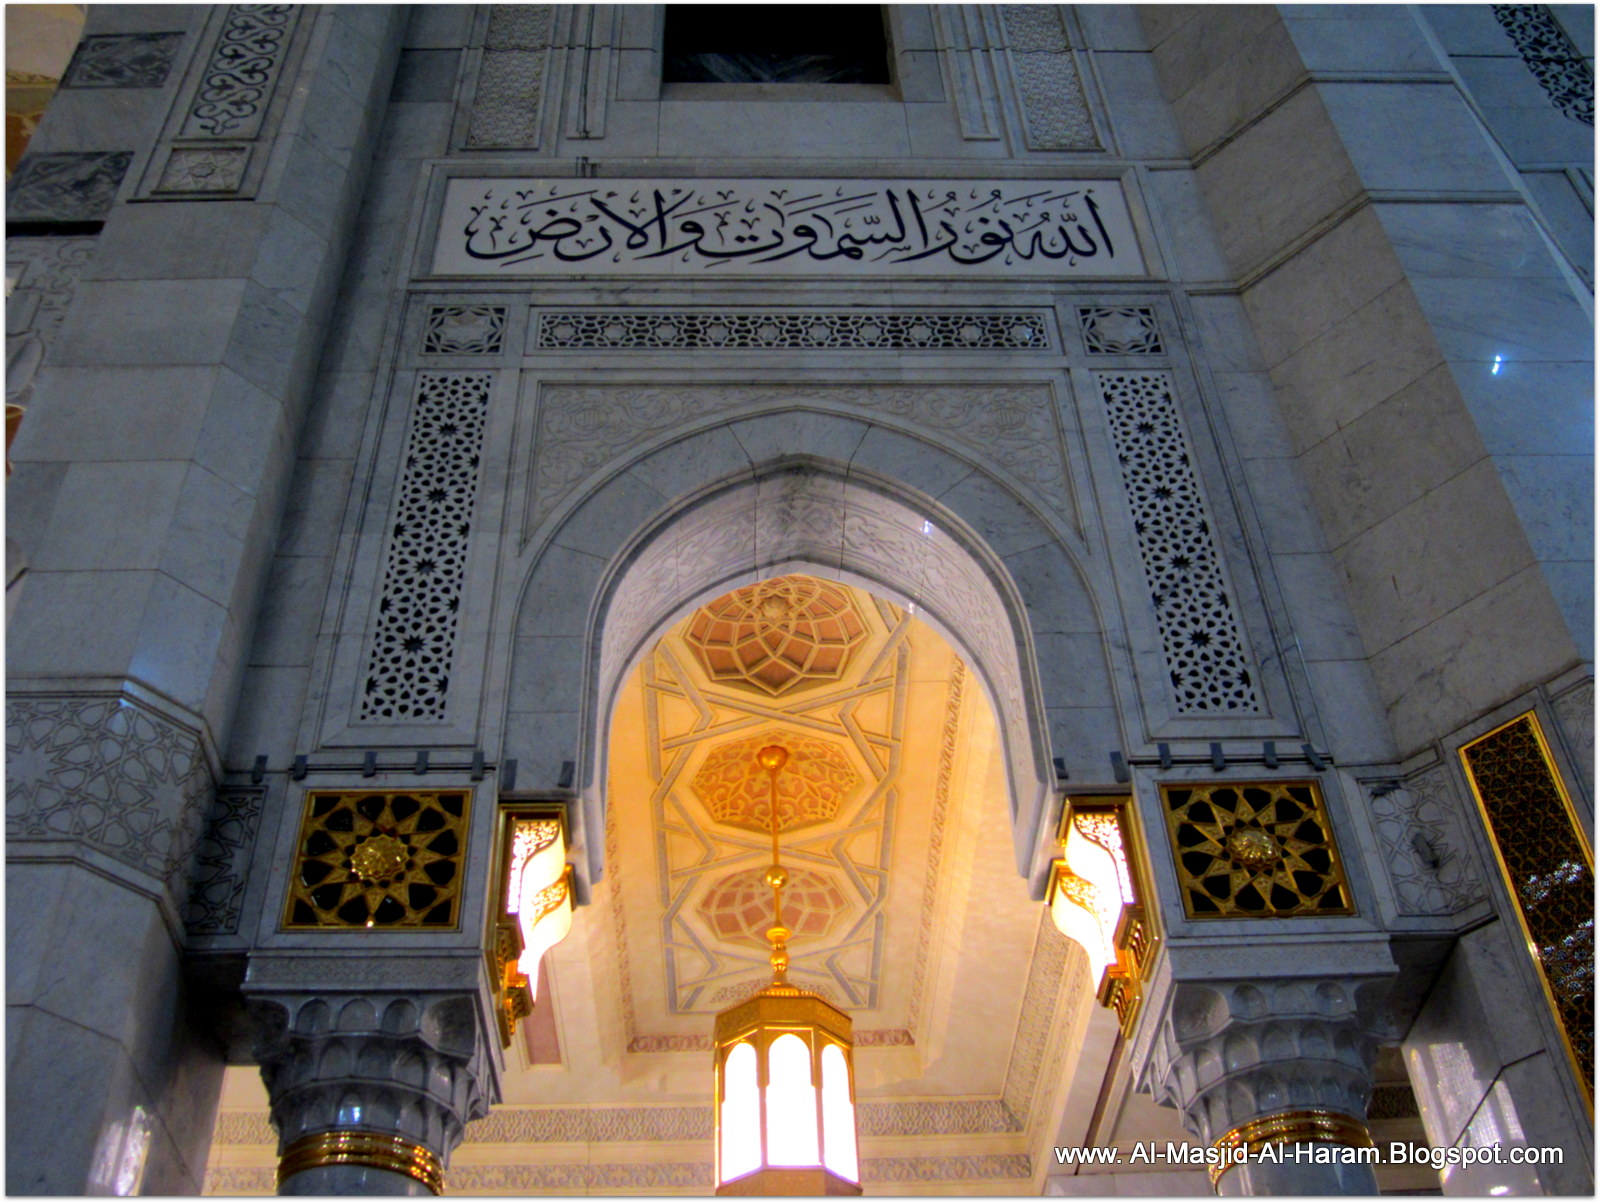 Pictures of Al Masjid Al Haram: Photos of Masjid Al Haram New Extension